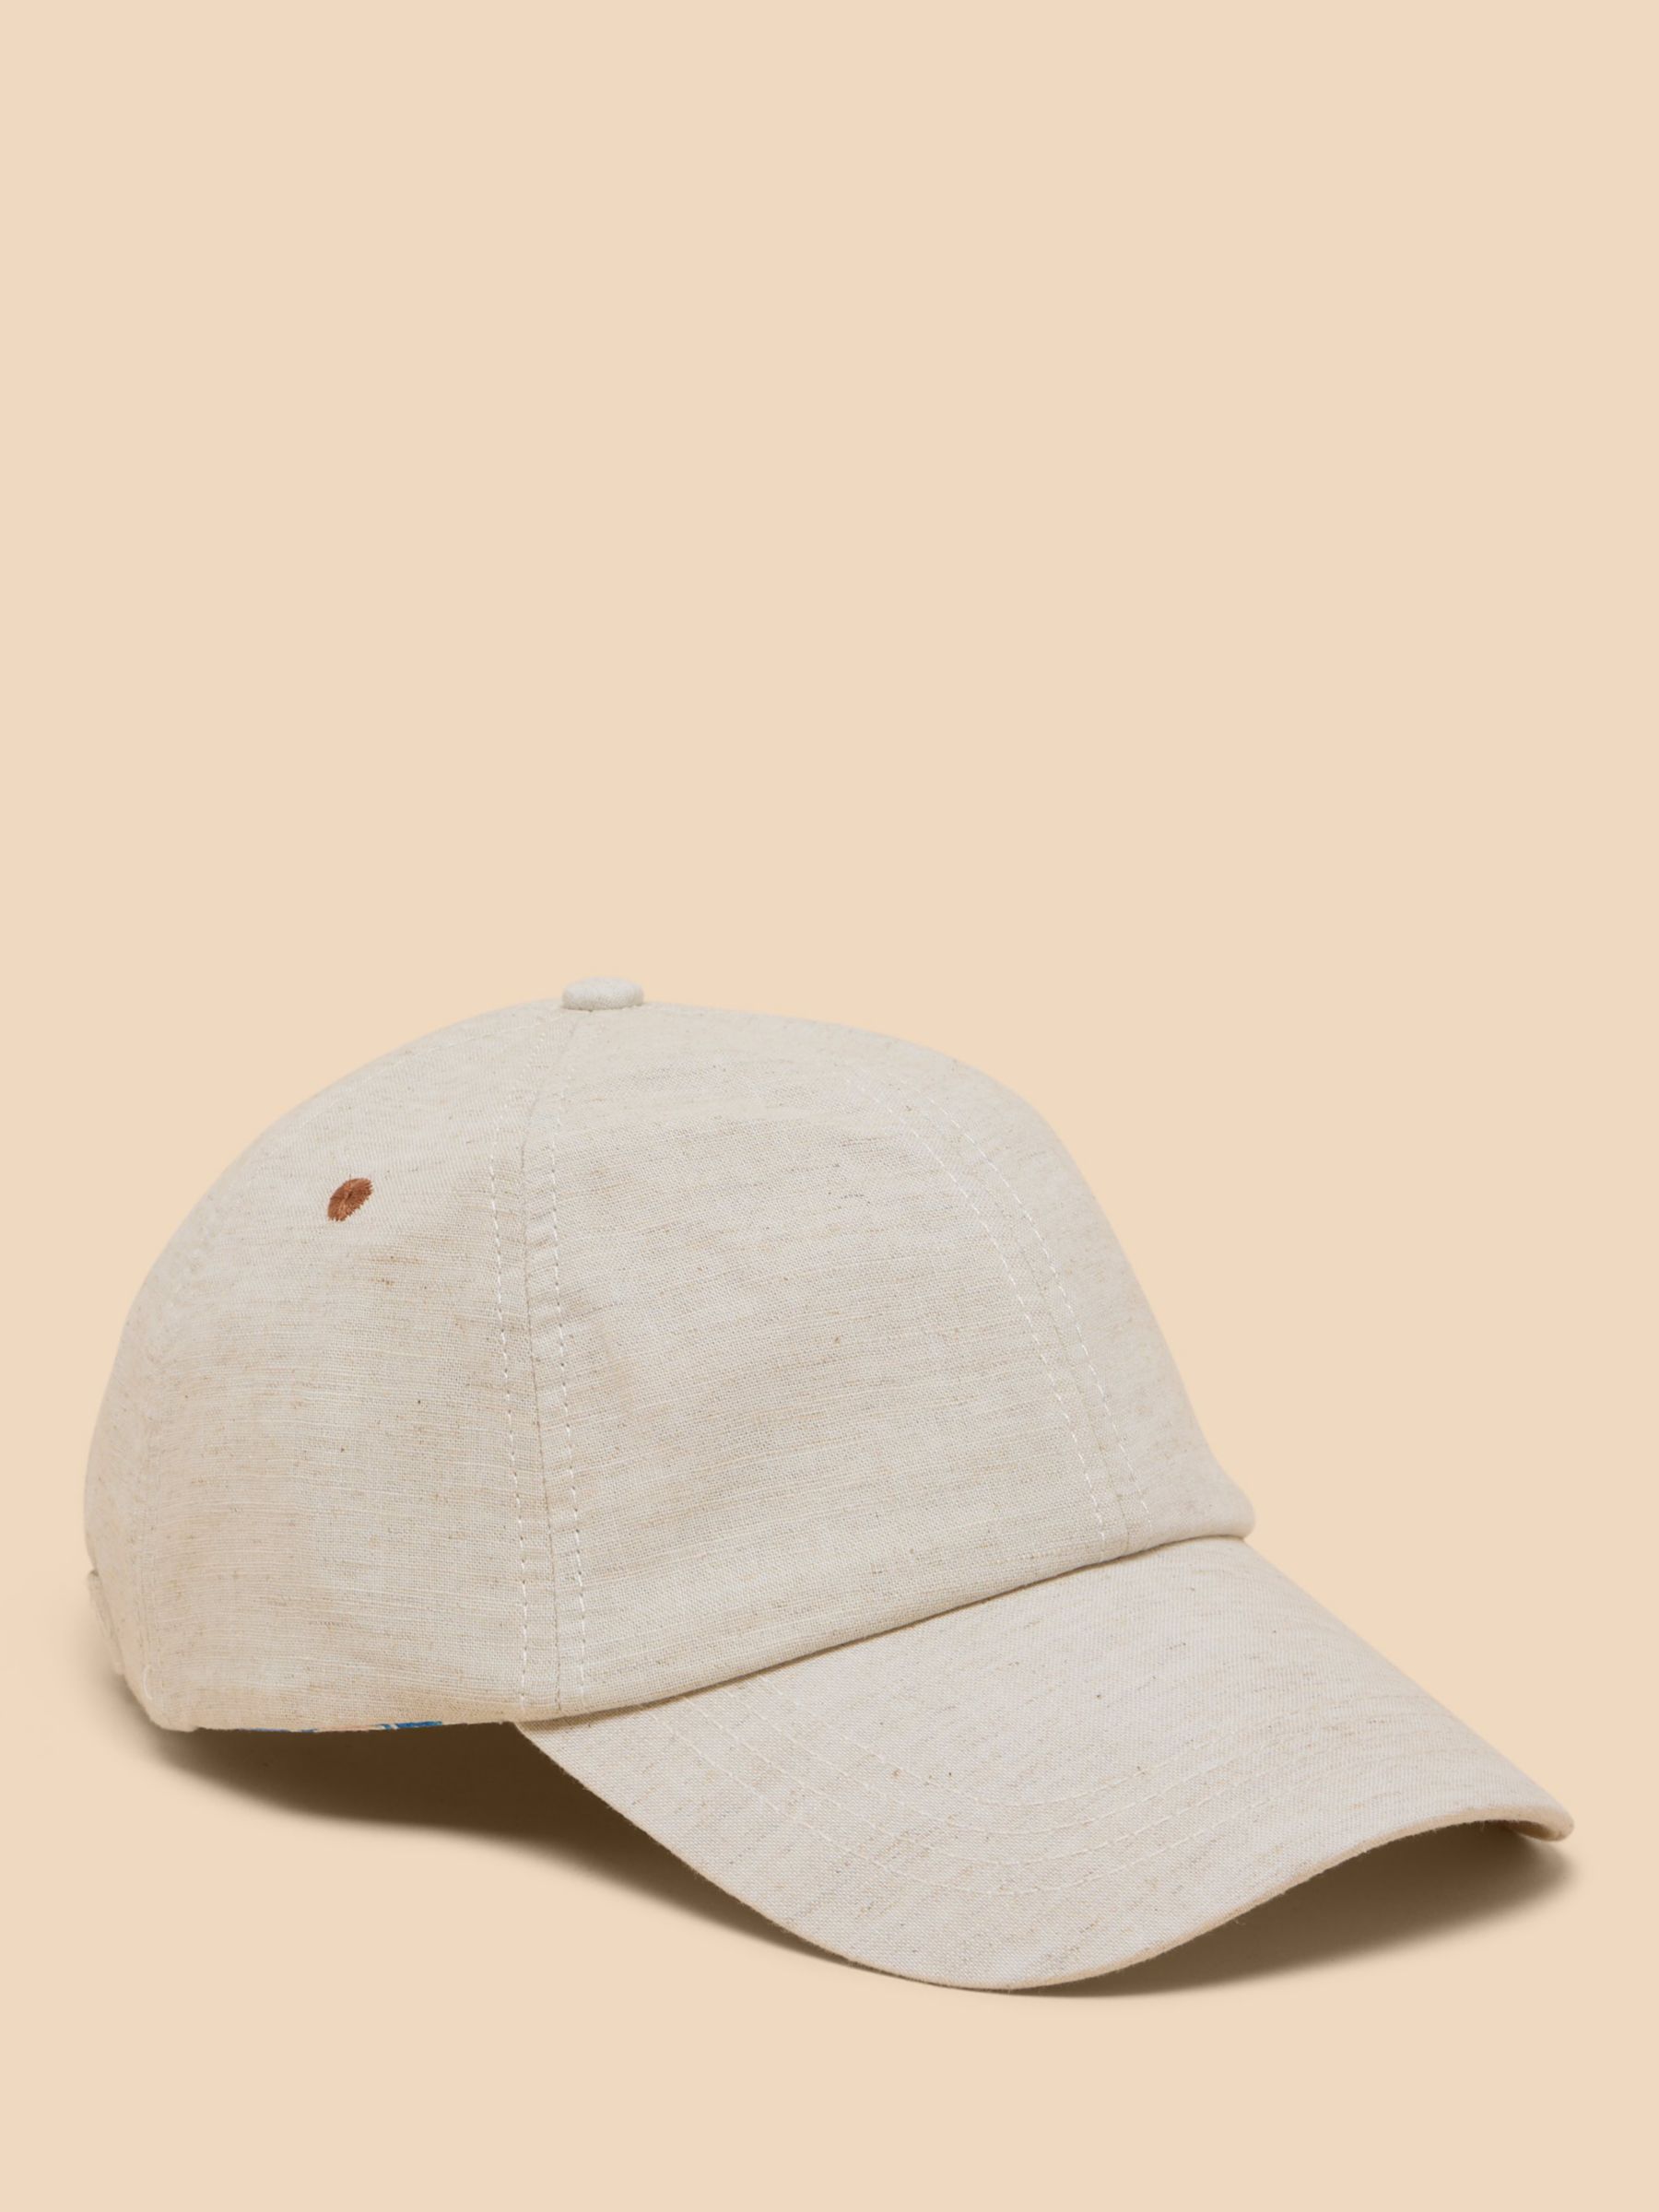 White Stuff Baseball Cap, Natural, One Size